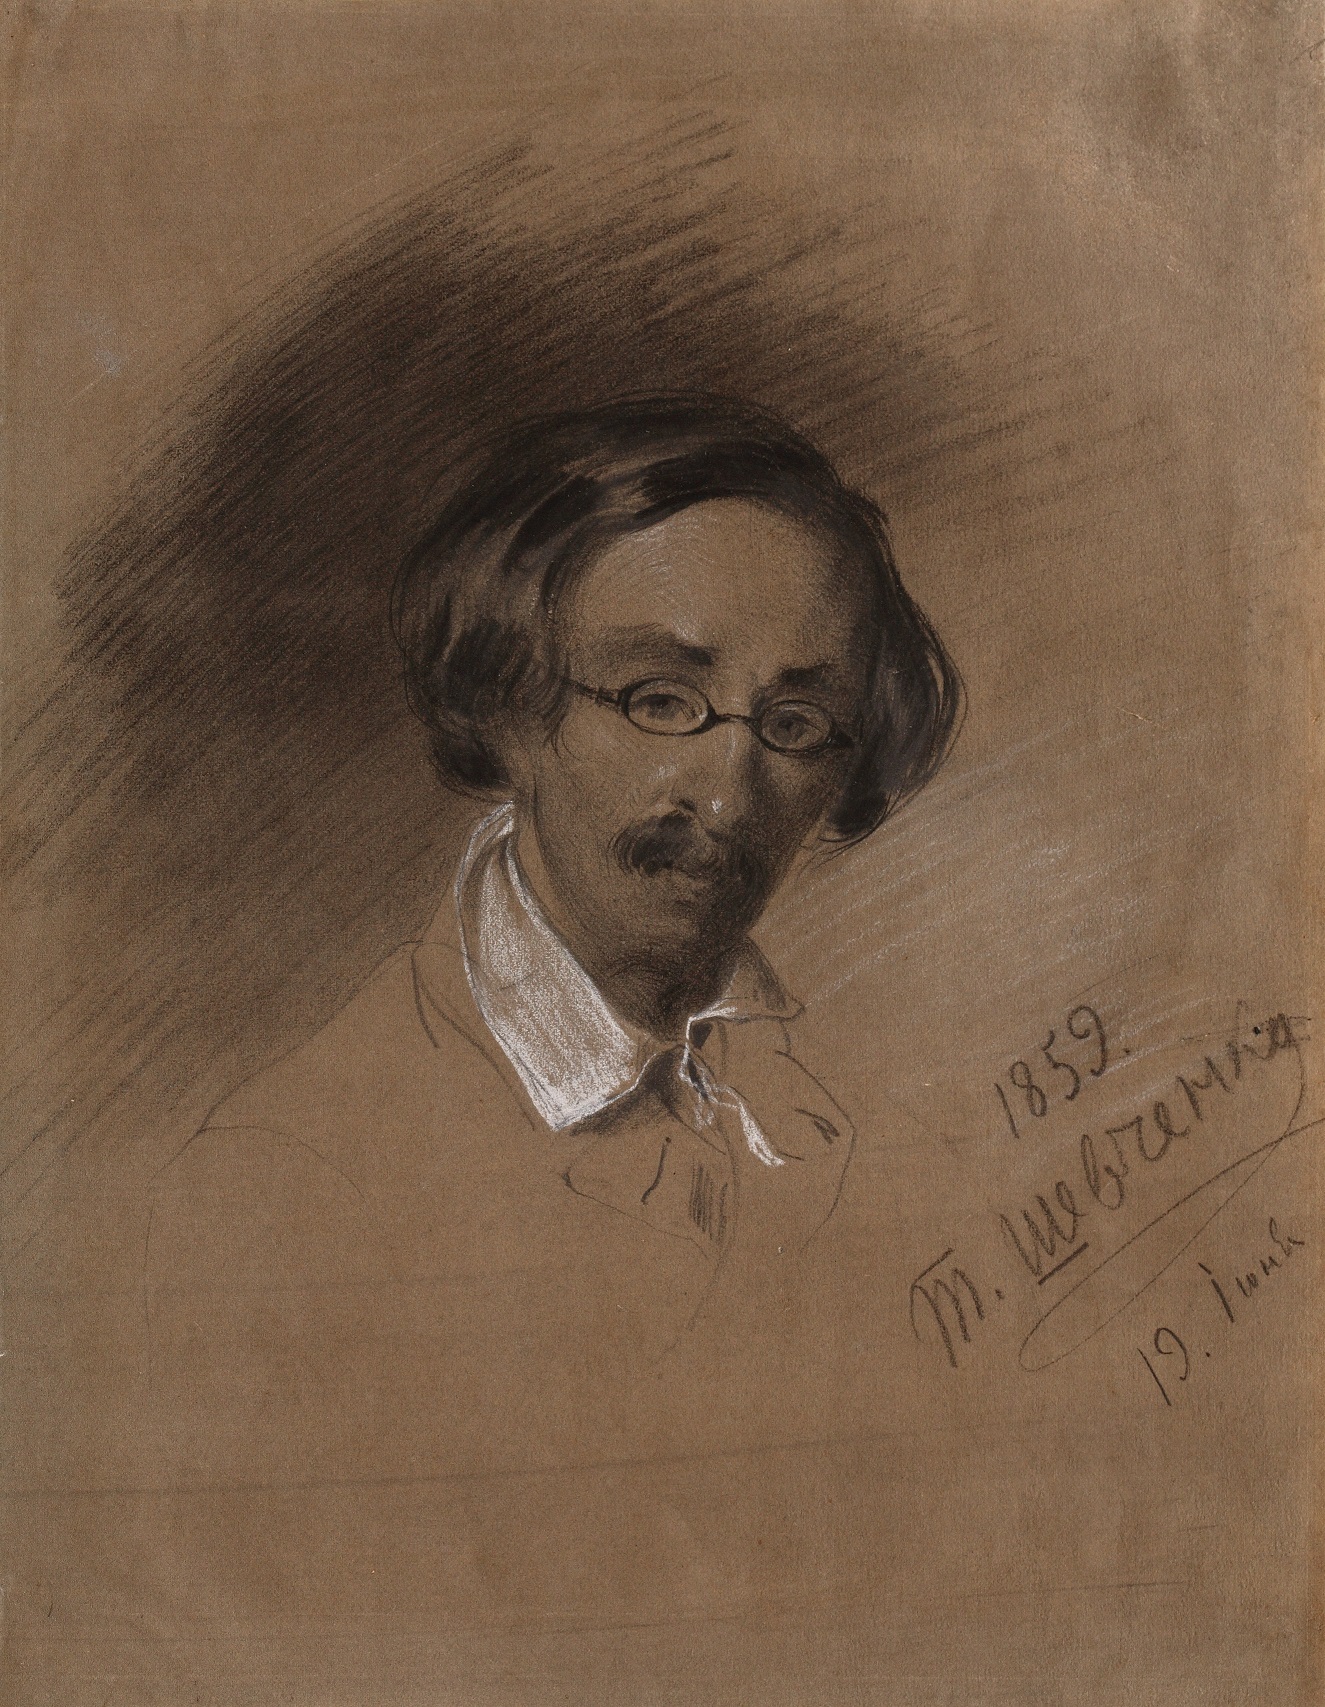 Portrait of Mykhailo Maksymovych, 1859, pencil, chalk